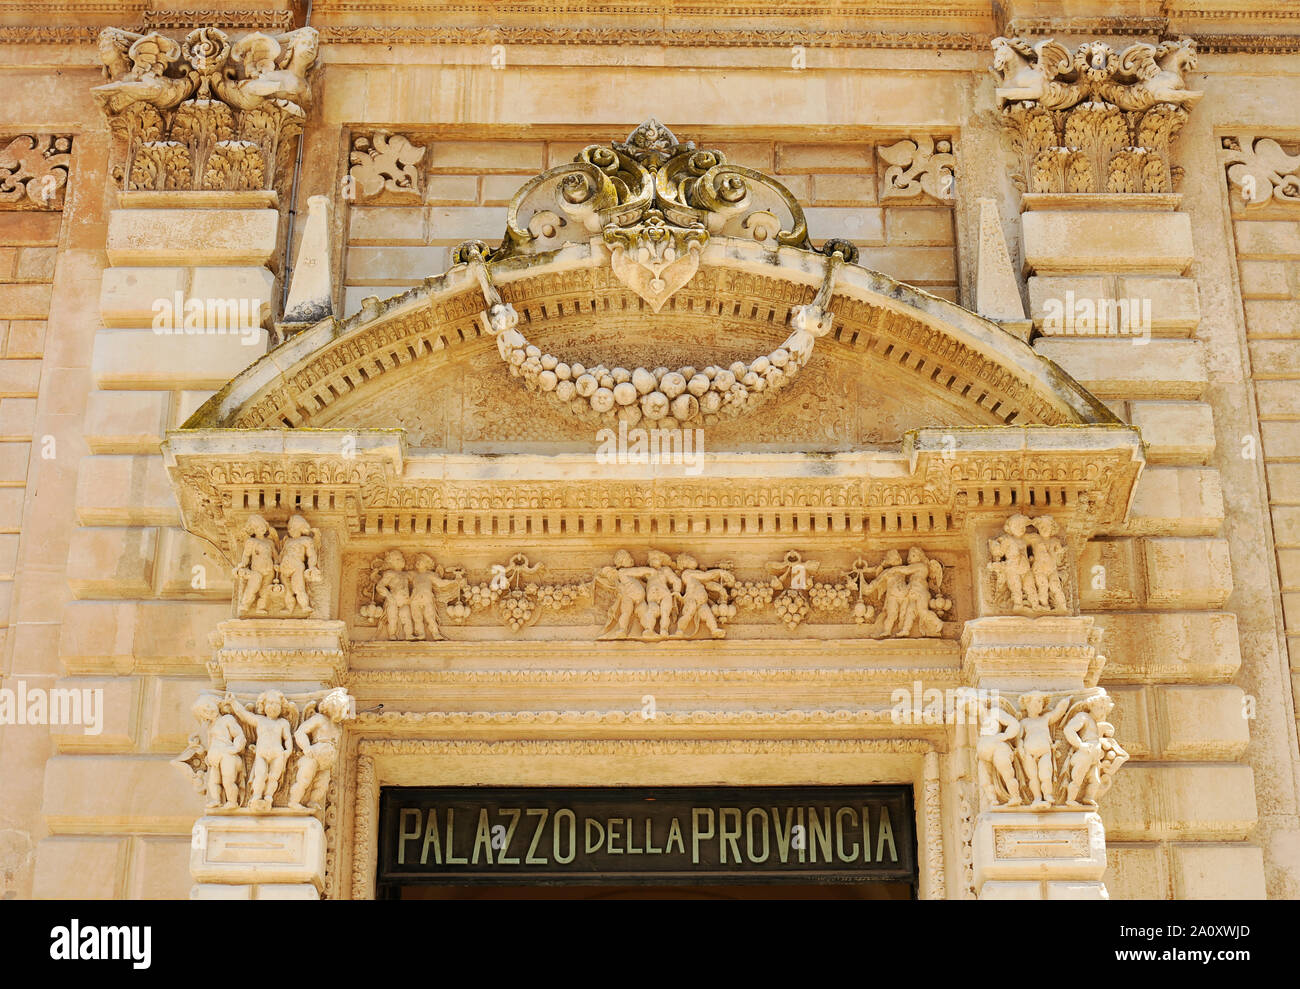 El Palazzo della Provincia, un ejemplo de monumento barroco en Lecce, Puglia, Italia Foto de stock